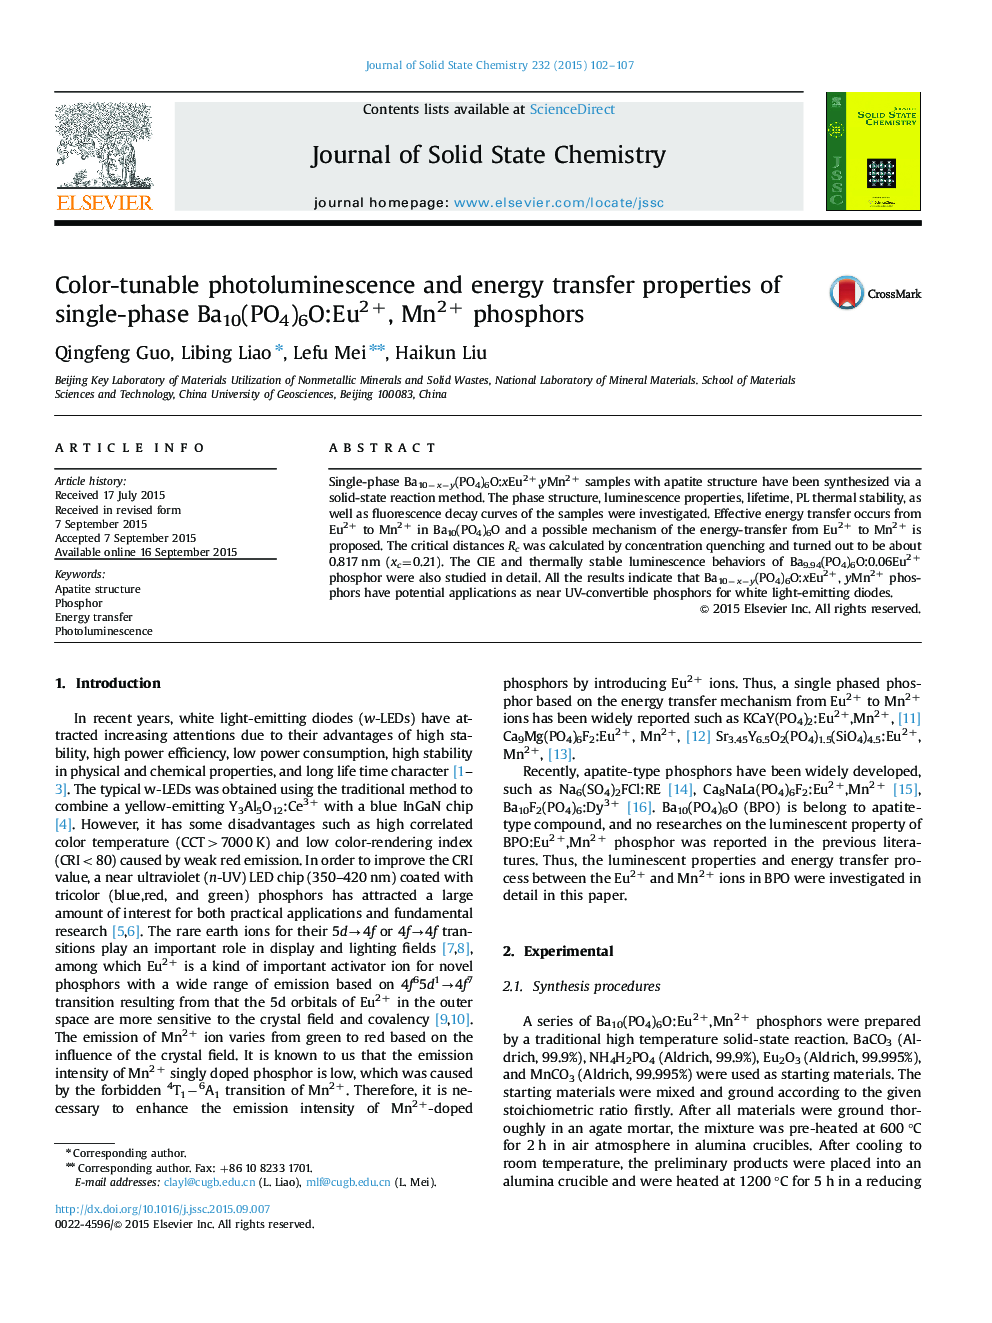 Color-tunable photoluminescence and energy transfer properties of single-phase Ba10(PO4)6O:Eu2+, Mn2+ phosphors